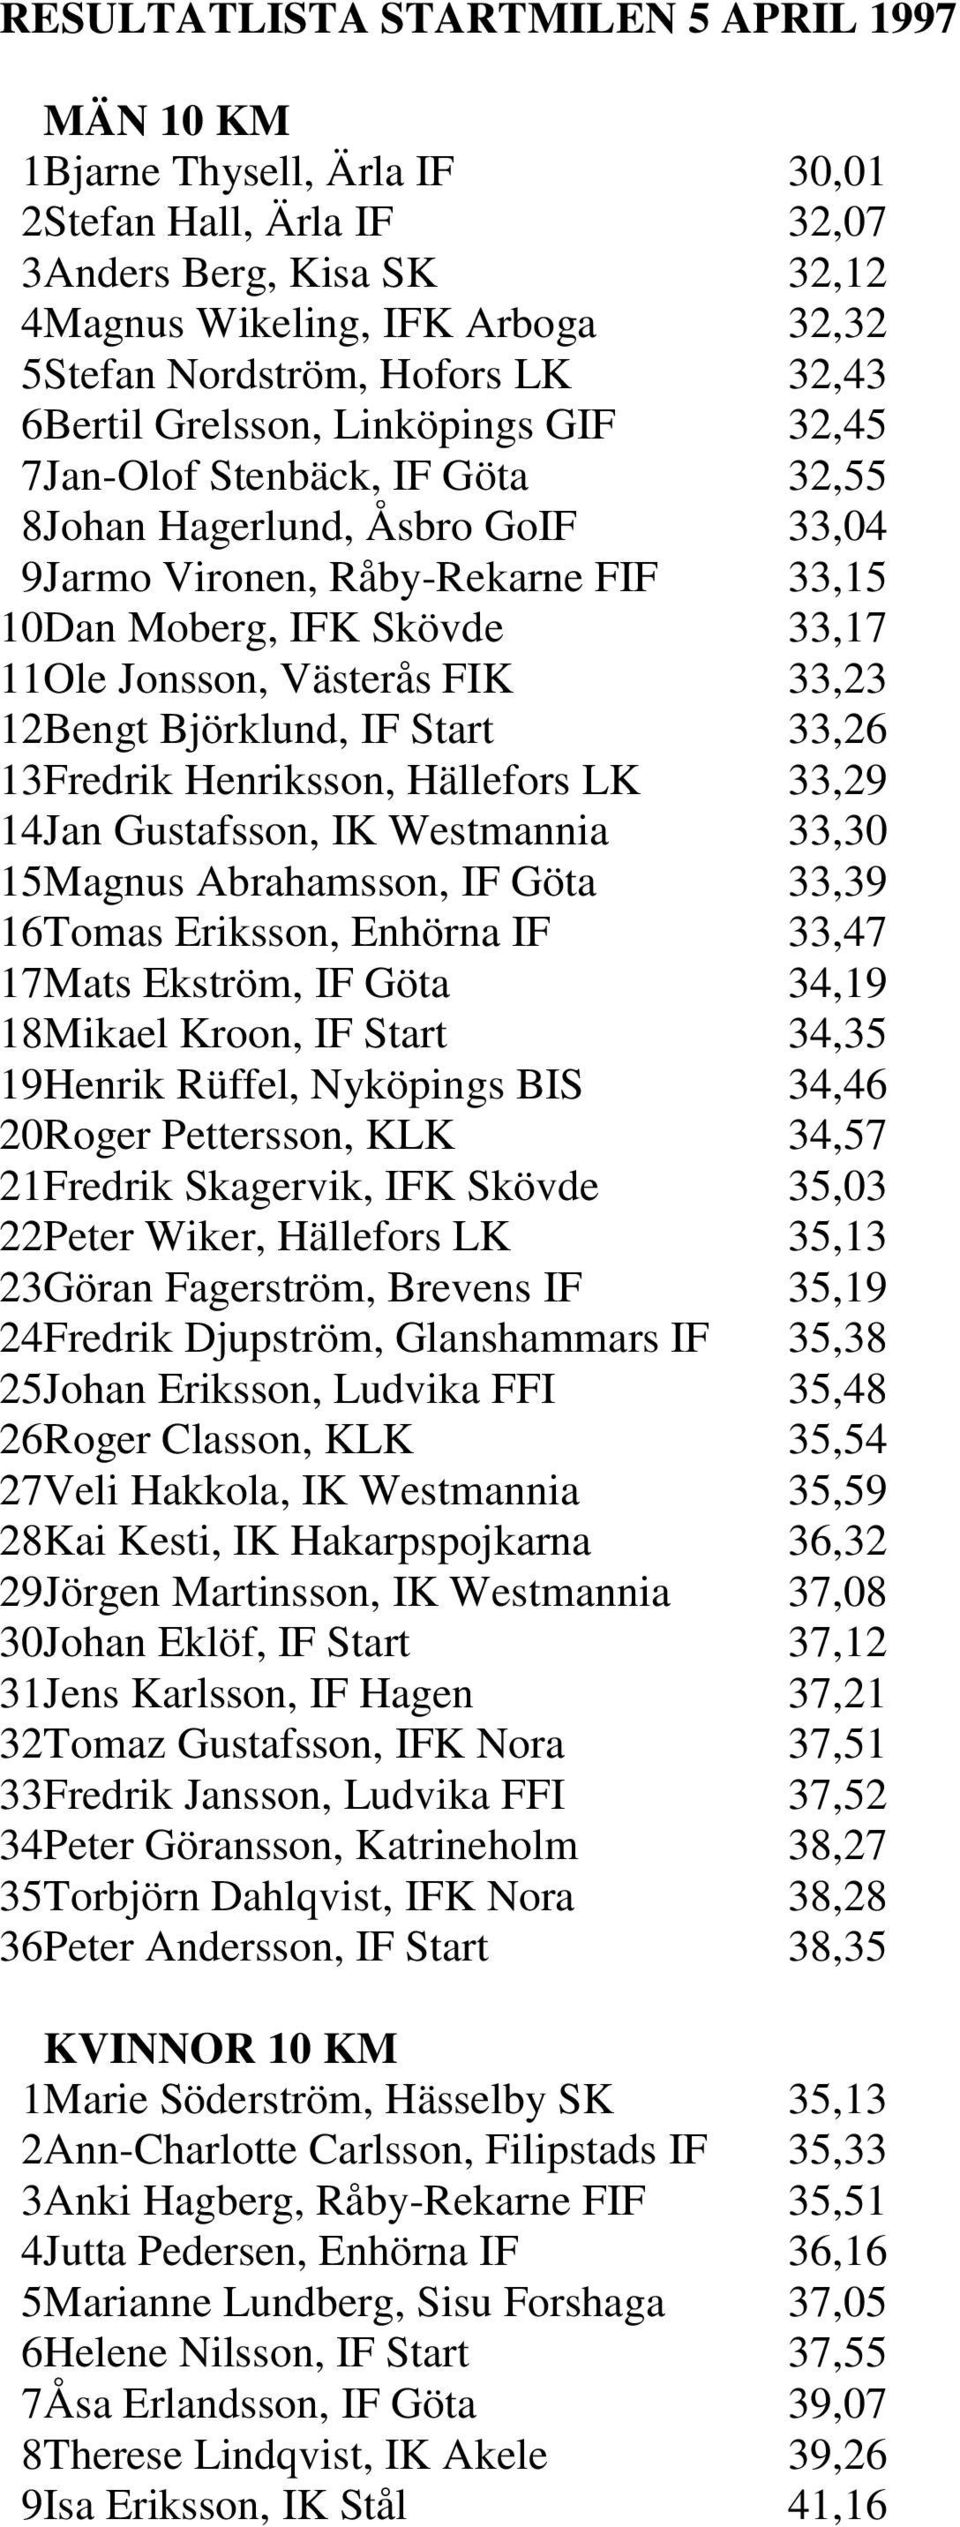 11 Ole Jonsson, Västerås FIK 33,23 12 Bengt Björklund, IF Start 33,26 13 Fredrik Henriksson, Hällefors LK 33,29 14 Jan Gustafsson, IK Westmannia 33,30 15 Magnus Abrahamsson, IF Göta 33,39 16 Tomas